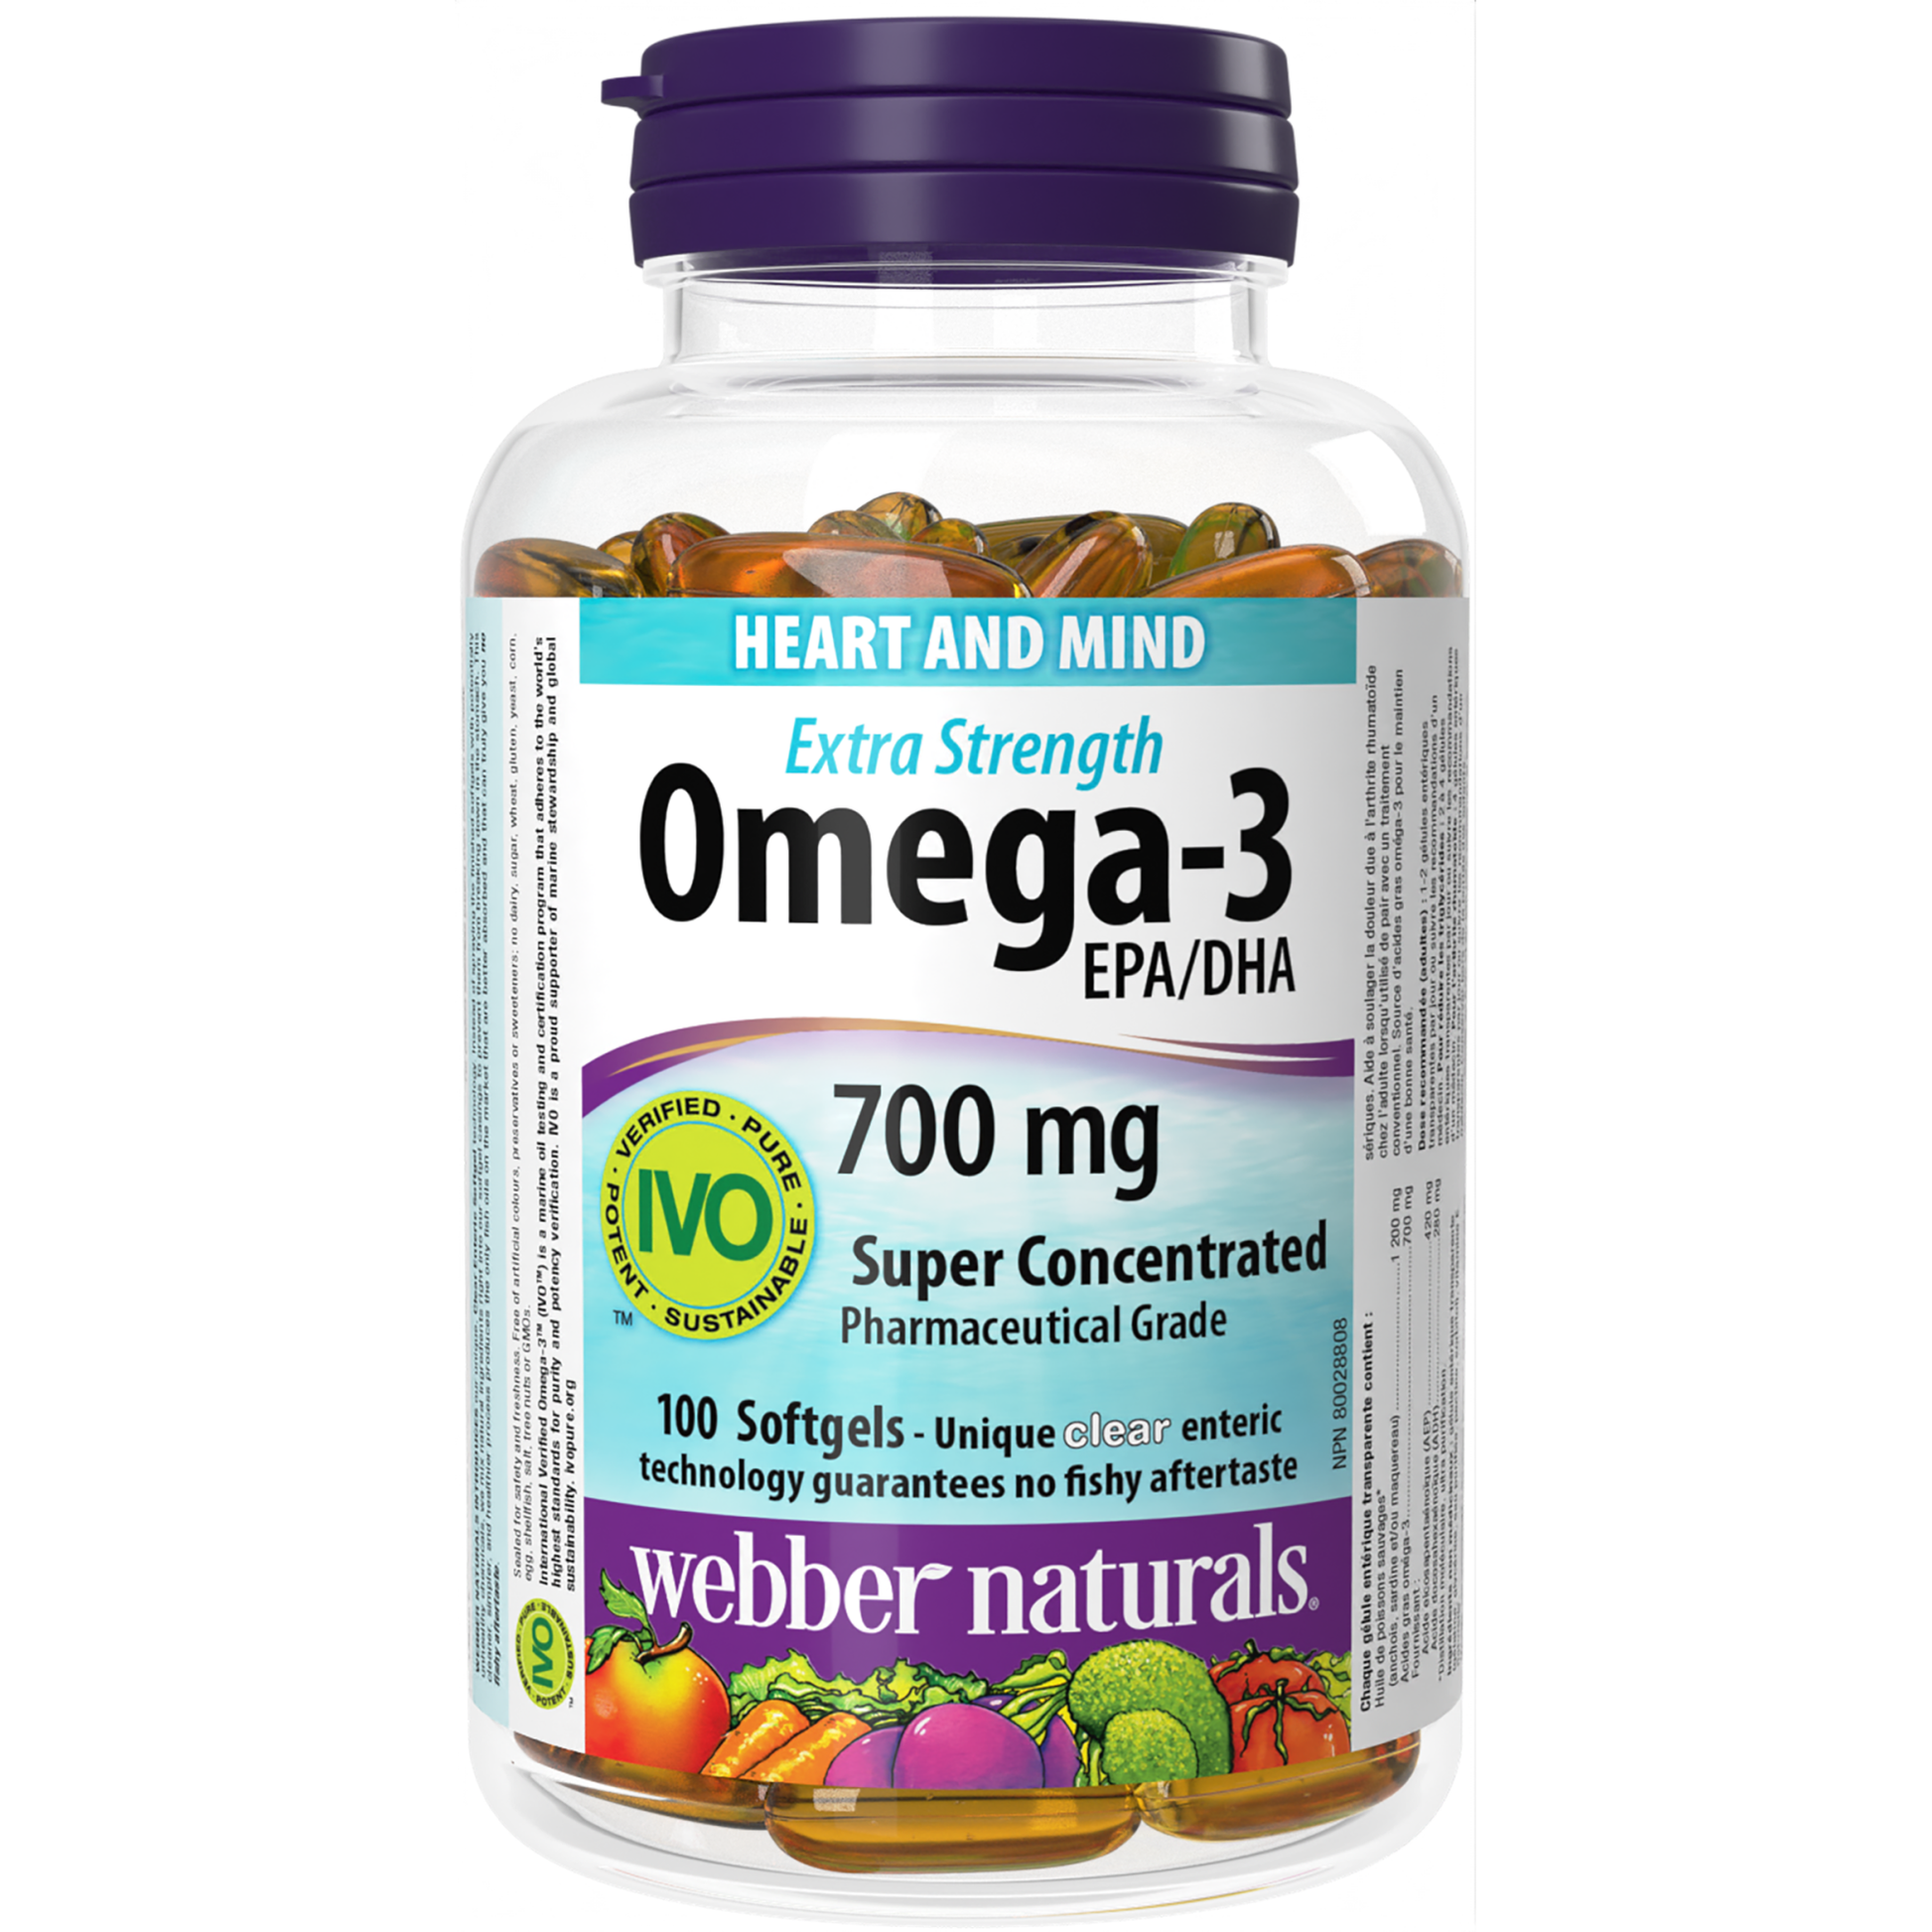 Omega-3 Extra Strength 700 mg EPA/DHA for Webber Naturals|v|hi-res|WN3397